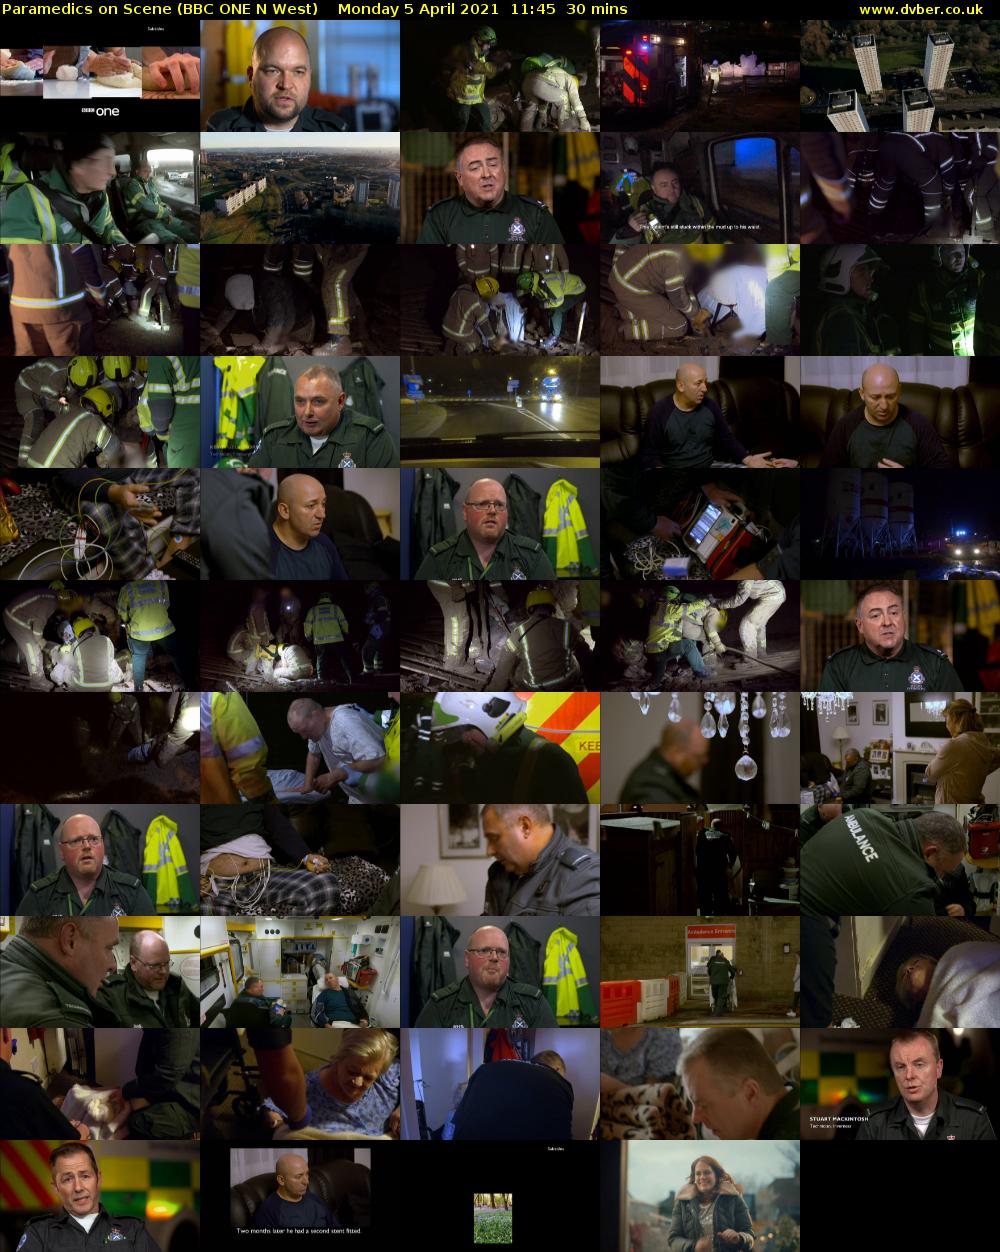 Paramedics on Scene (BBC ONE N West) Monday 5 April 2021 11:45 - 12:15